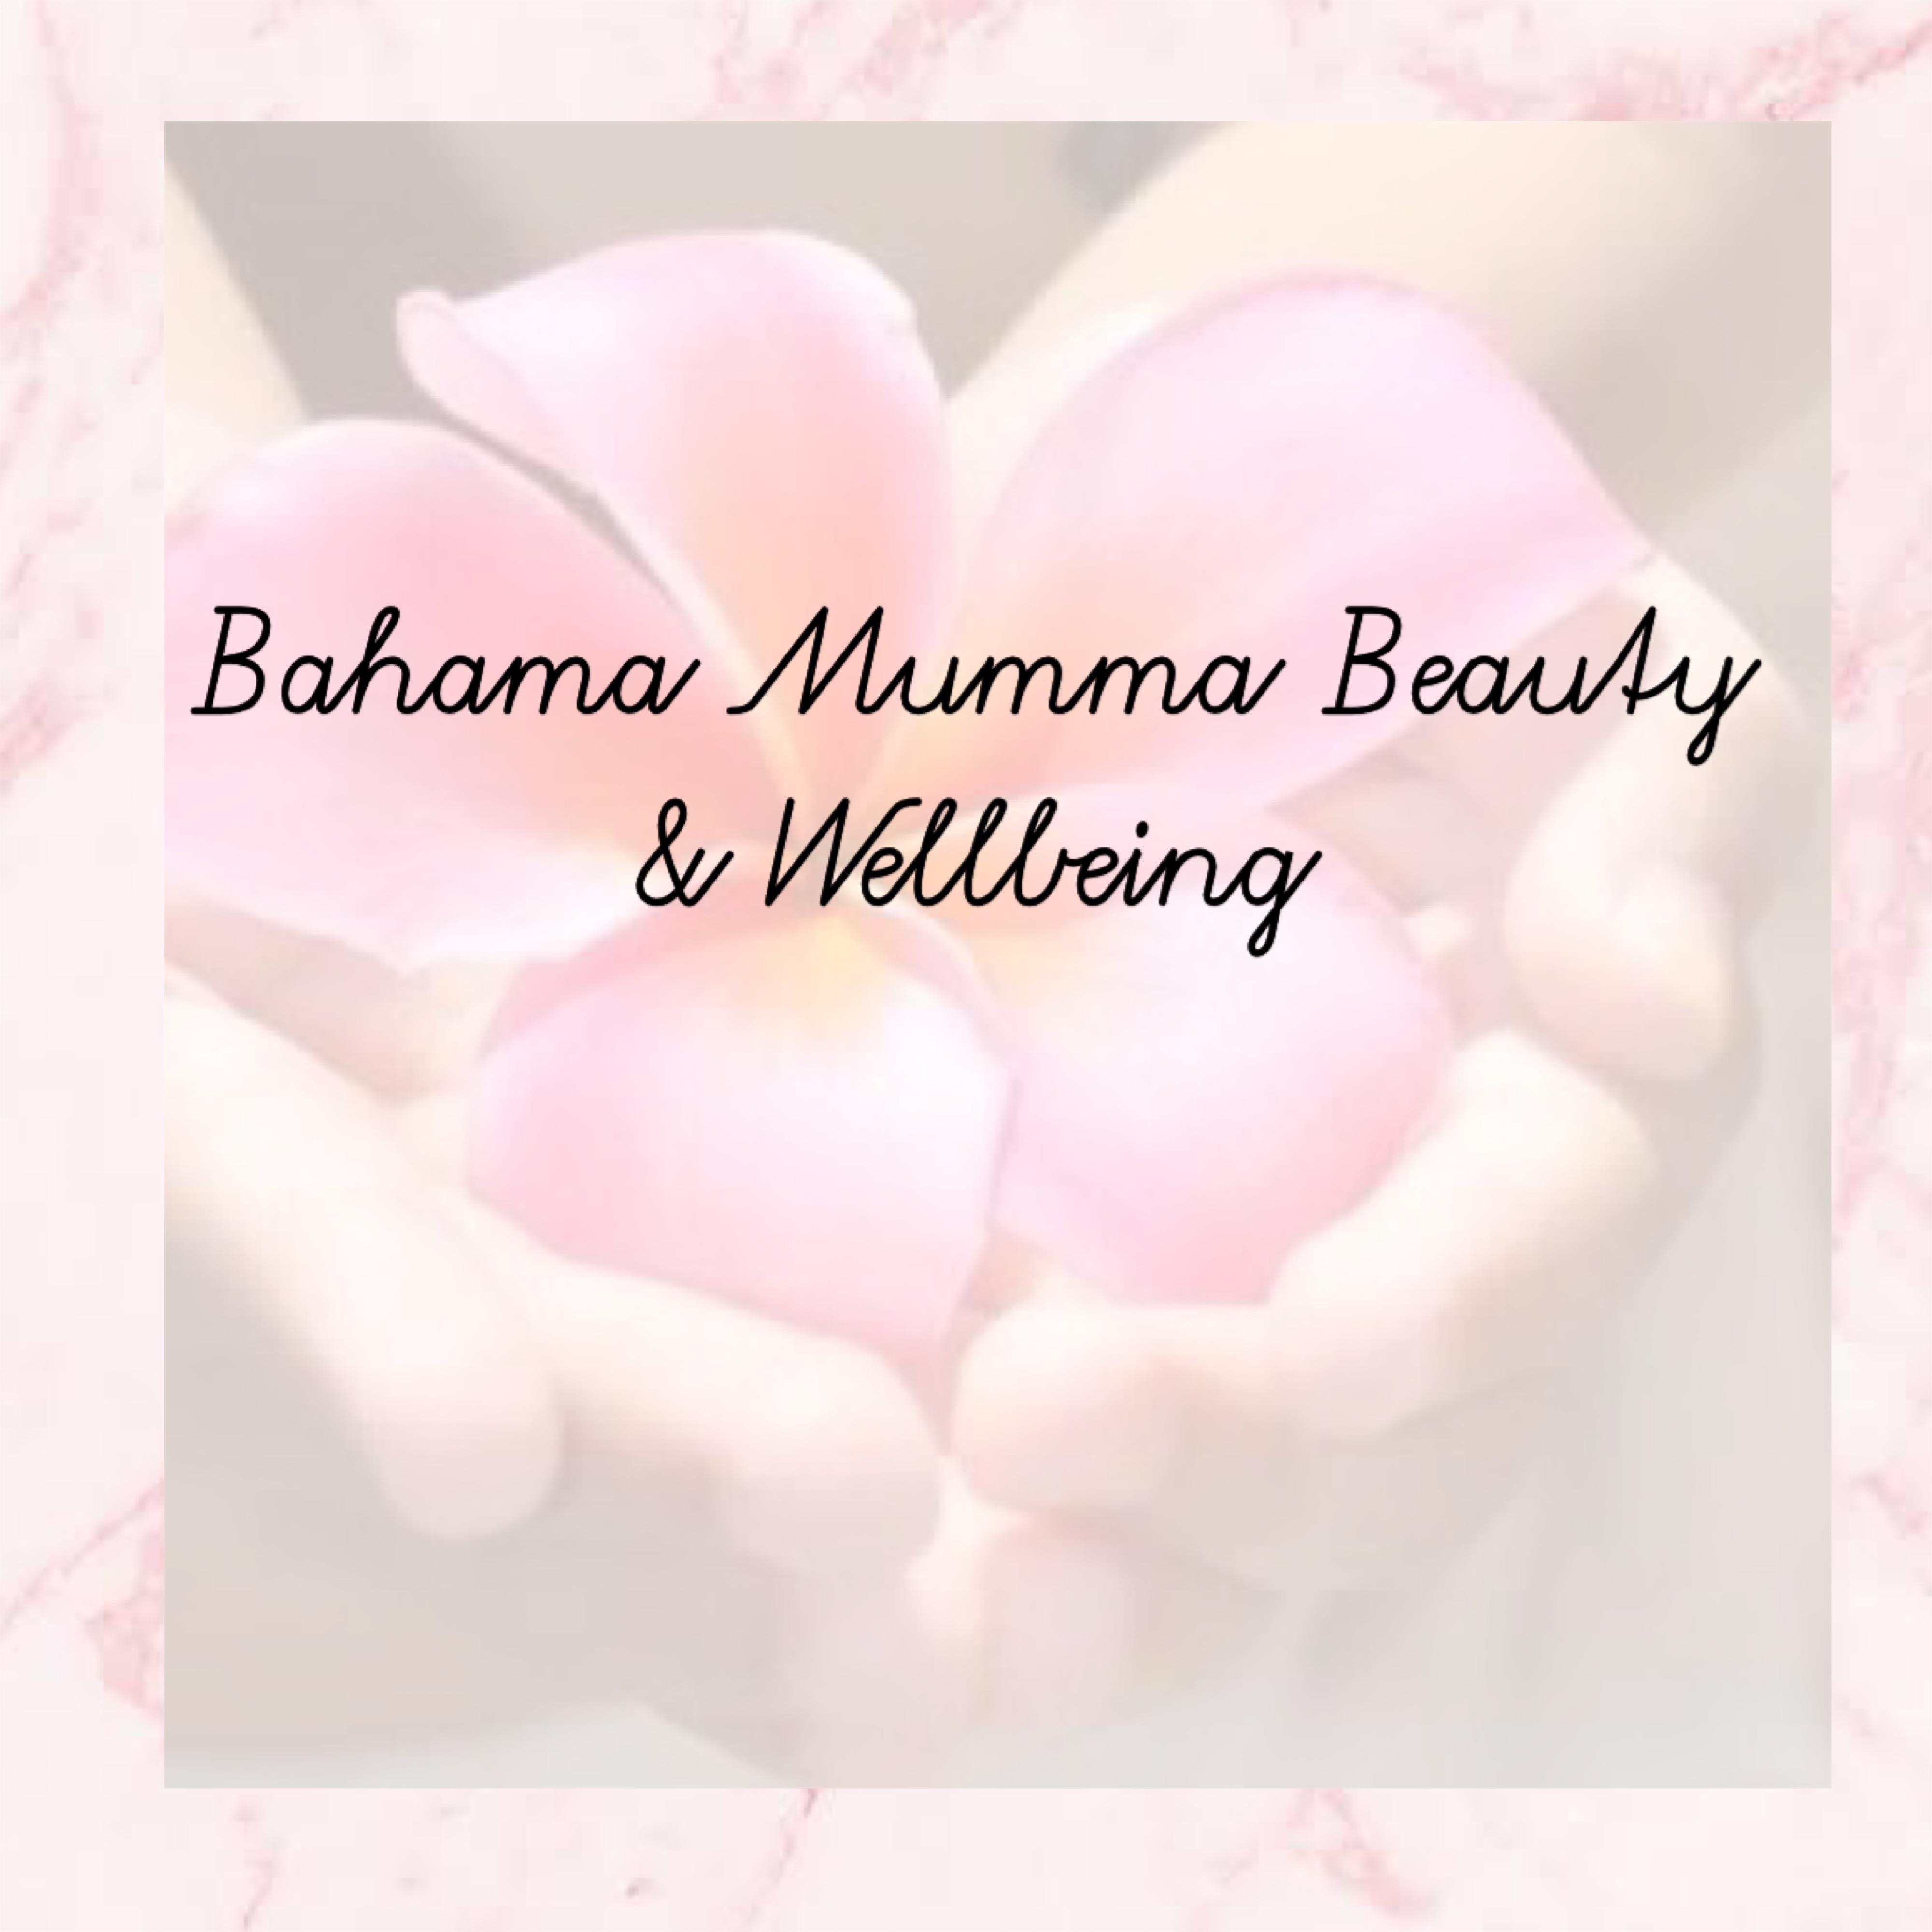 Bahama Mumma Beauty & Wellbeing 